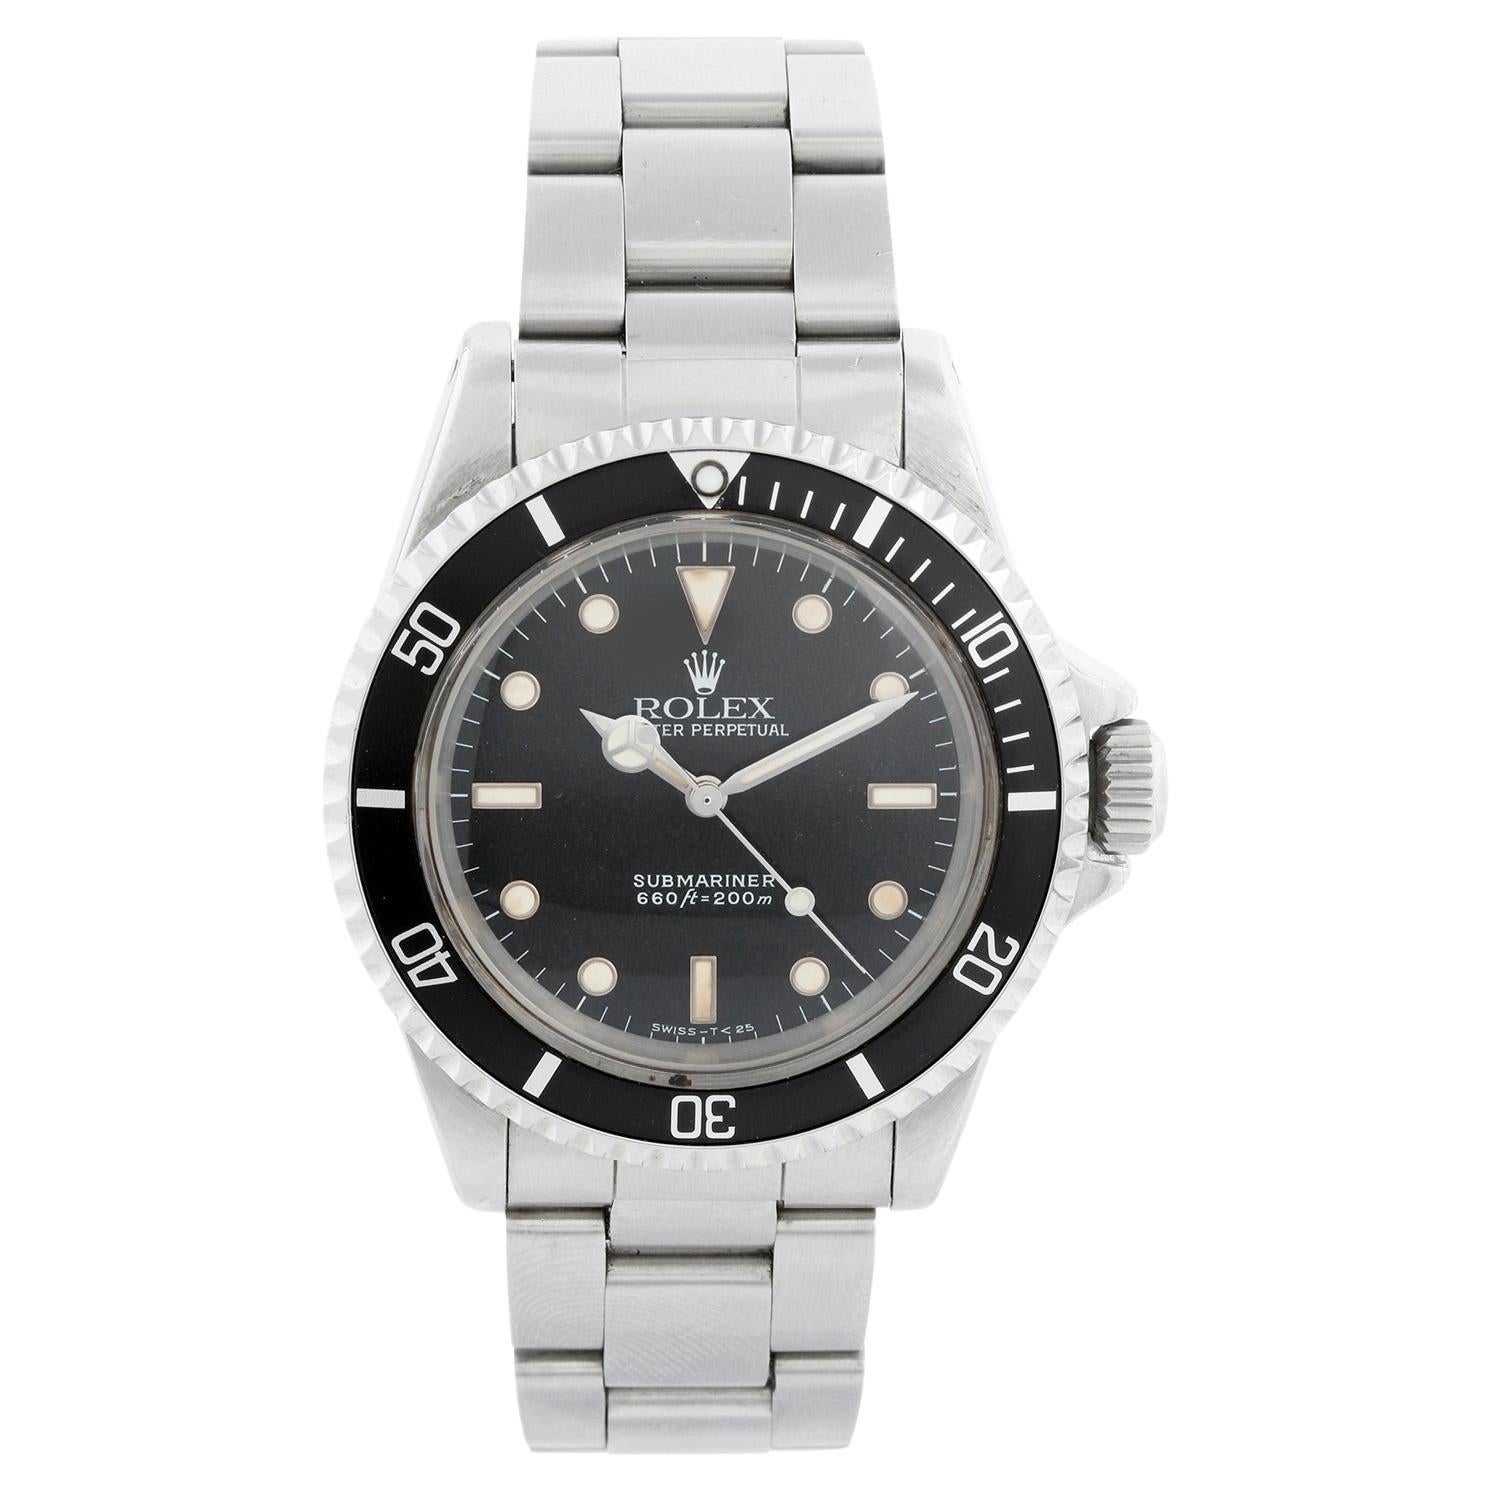 Vintage Rolex Submariner Black Dial Men's Automatic Watch 5513